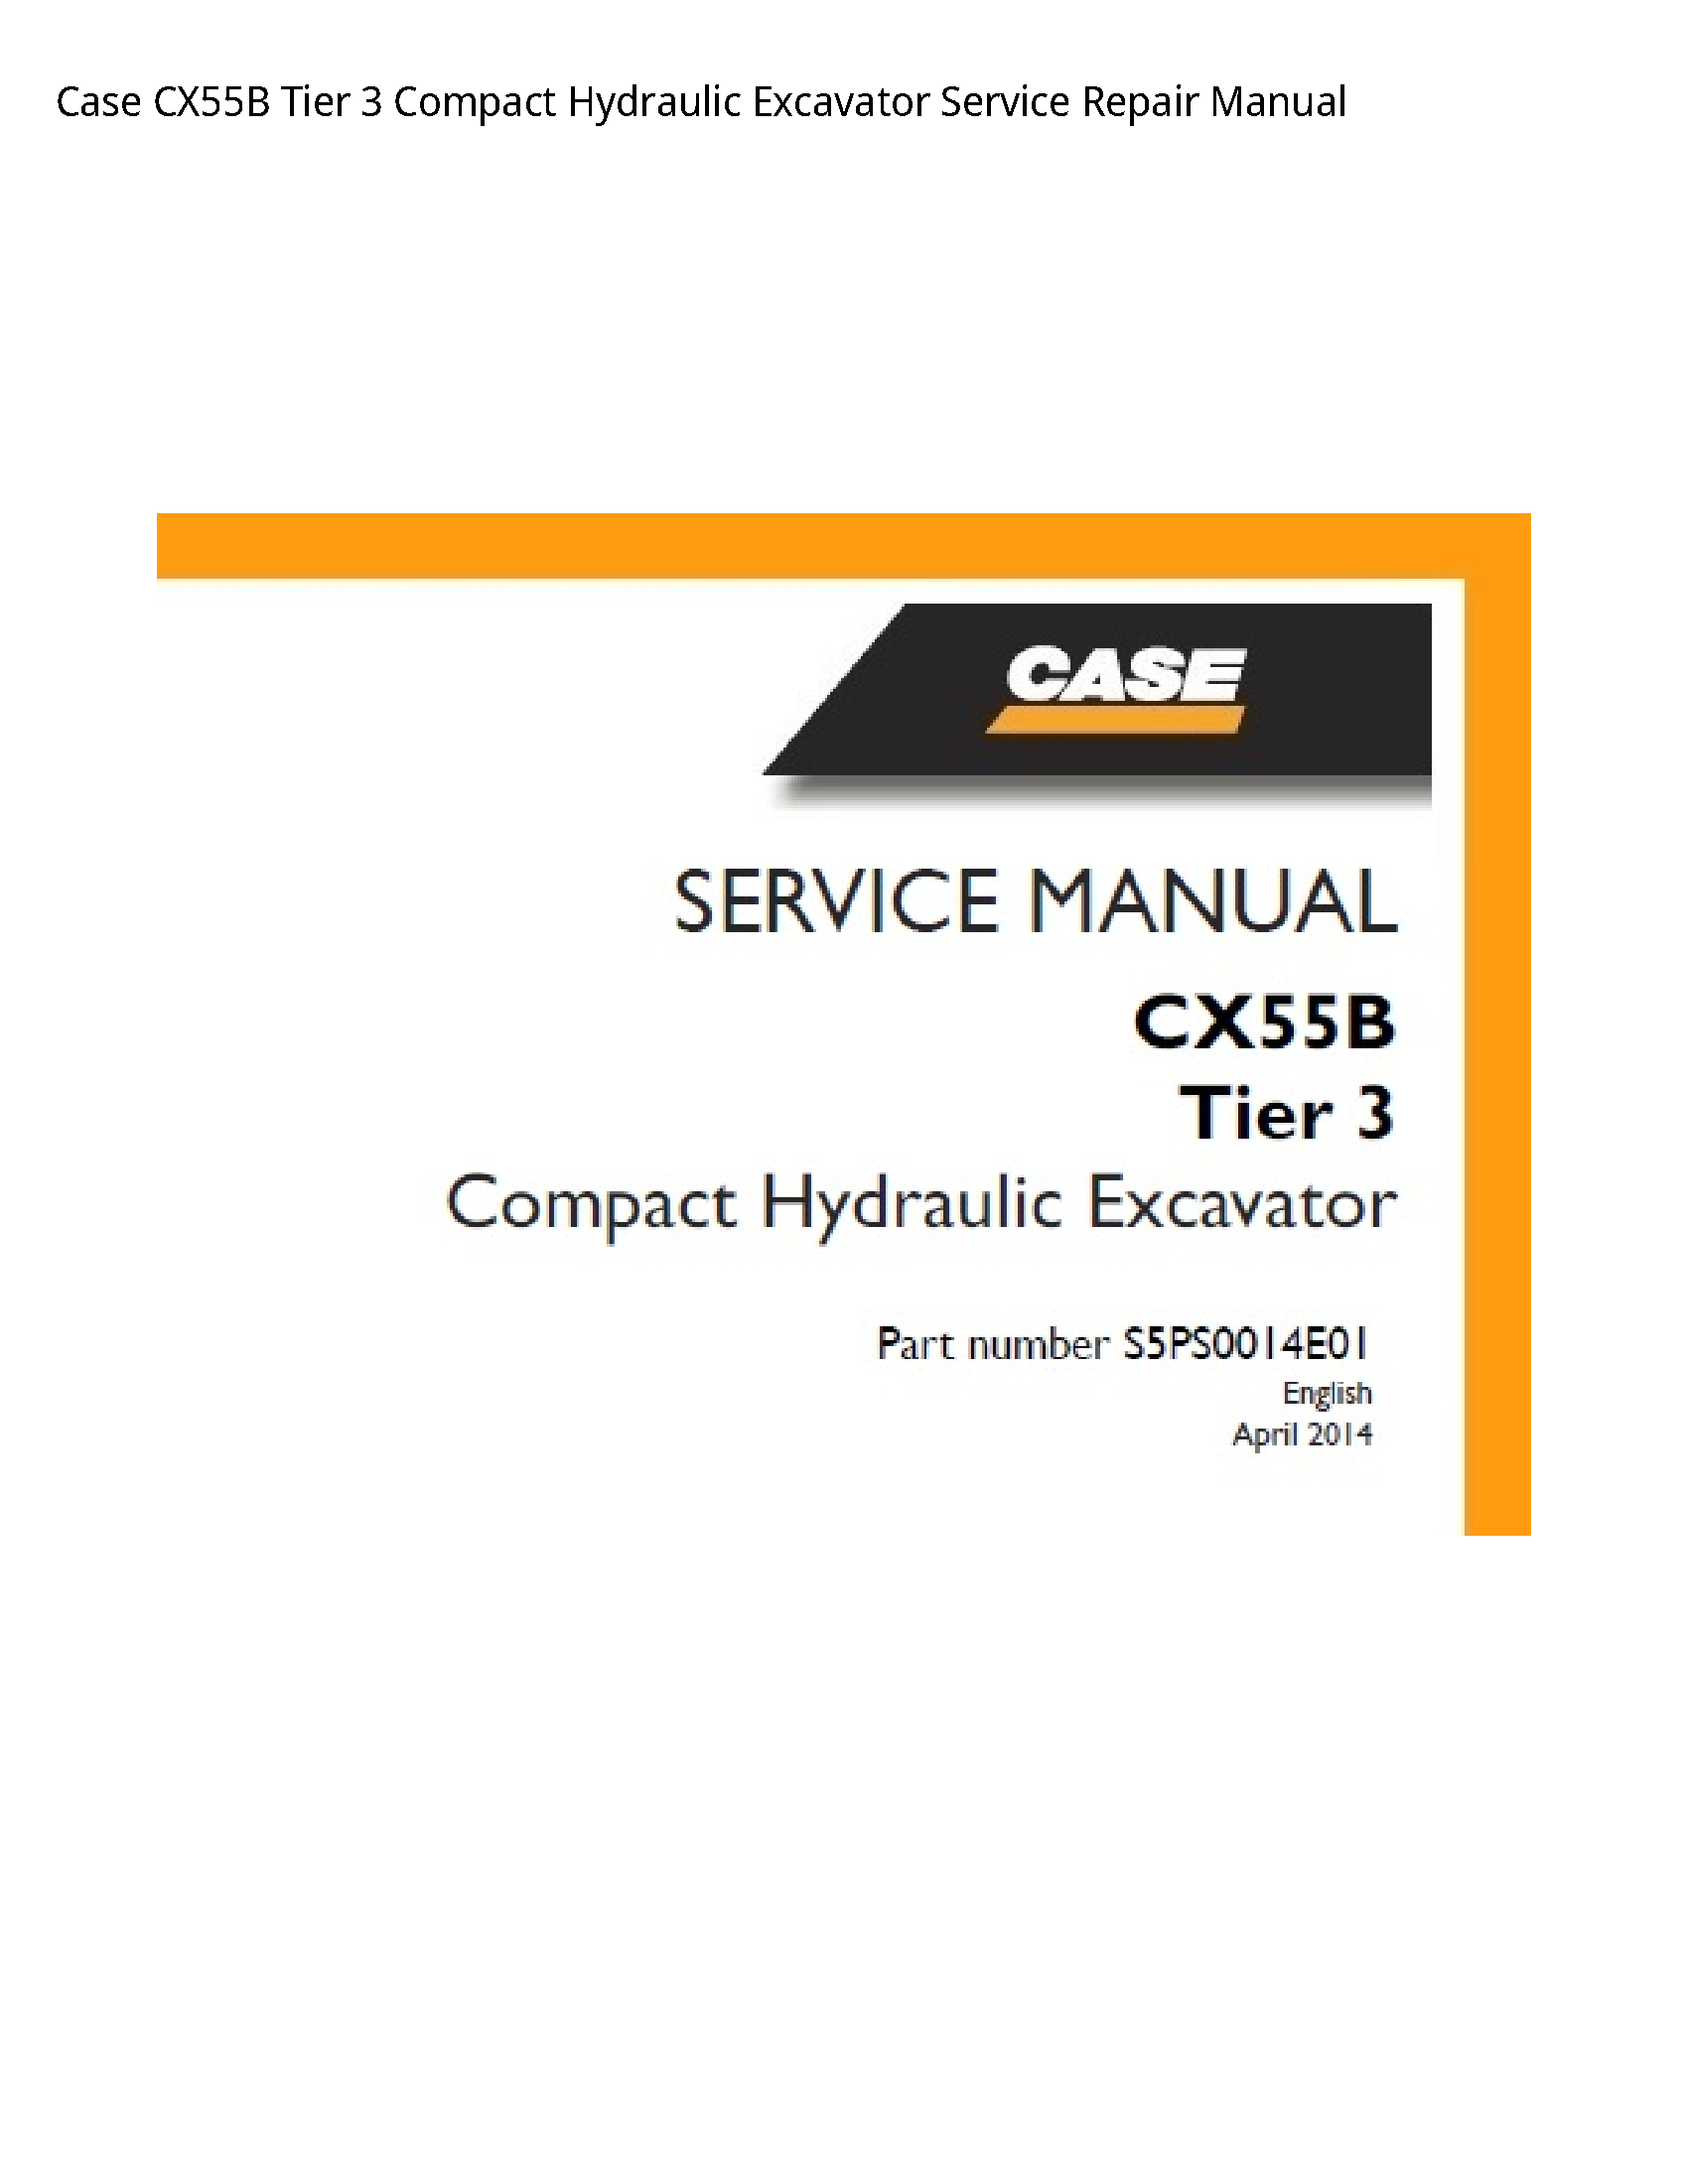 Case/Case IH CX55B Tier Compact Hydraulic Excavator manual